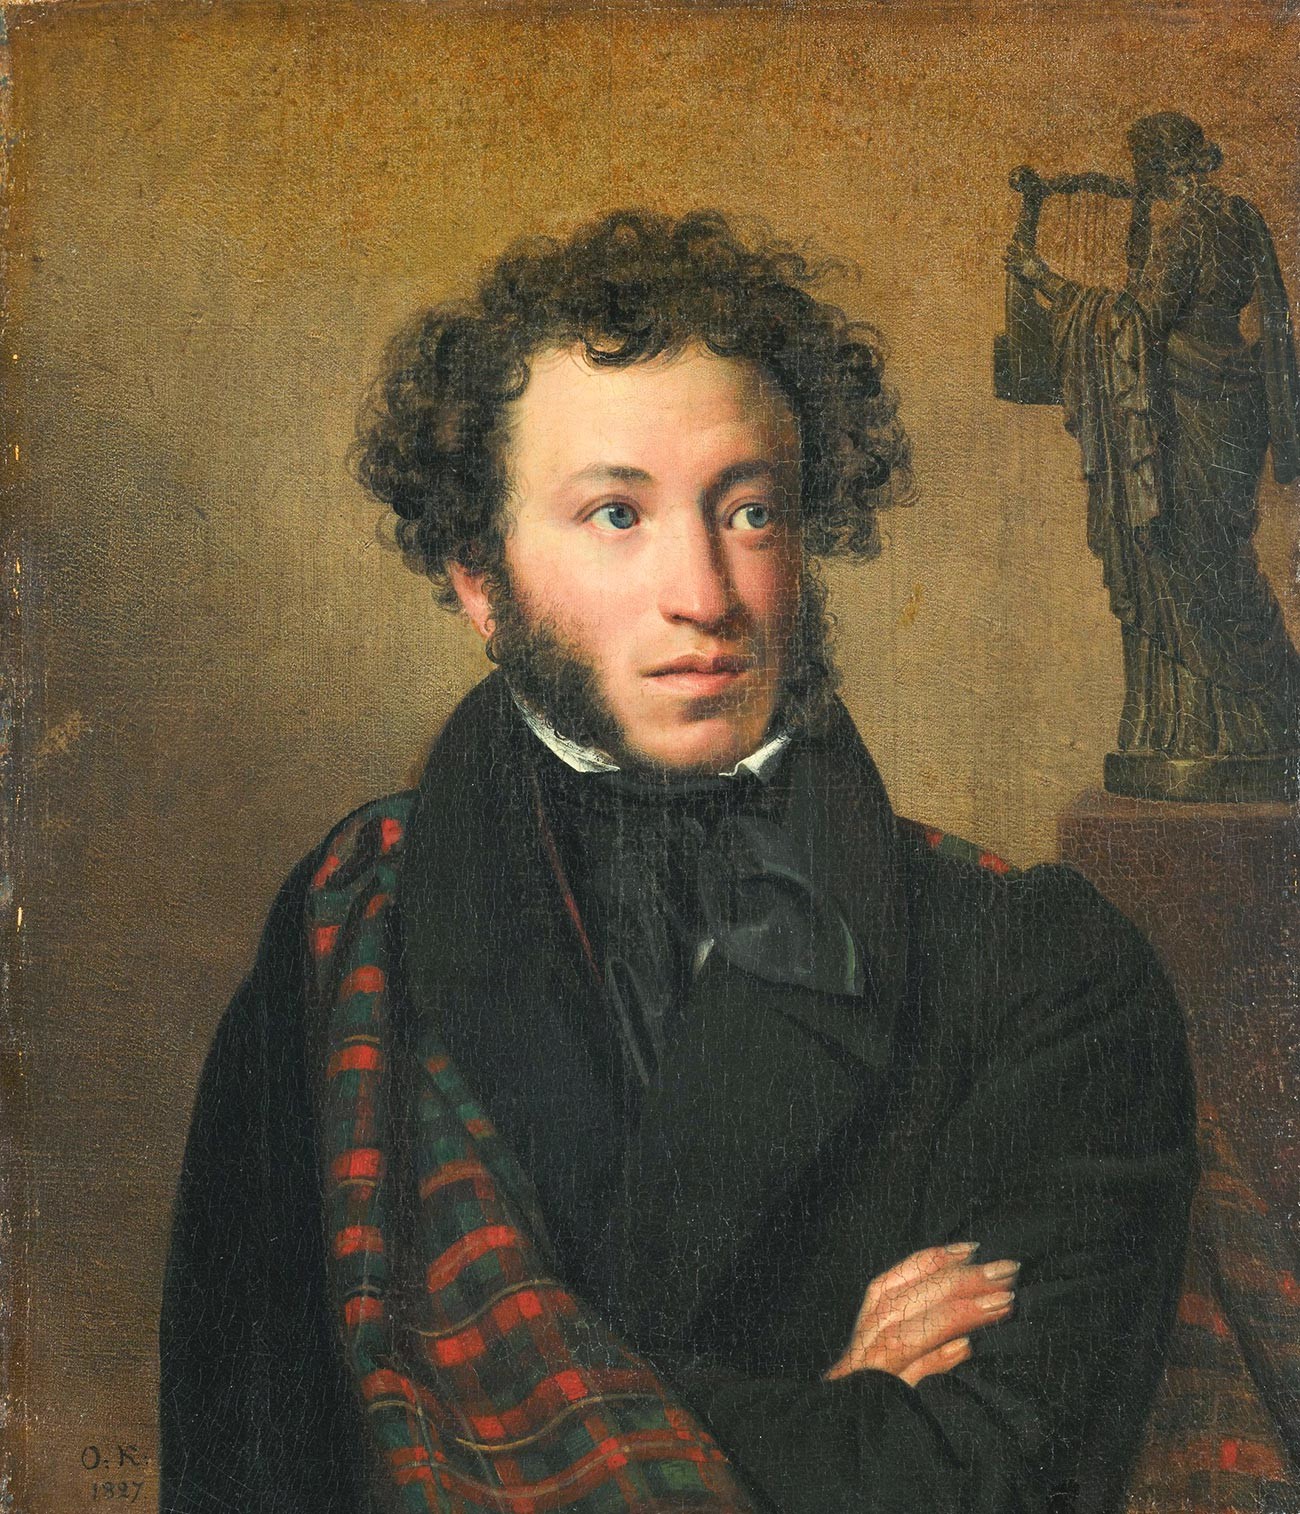 Portrait of Alexander Pushkin, by Orest Kiprensky.